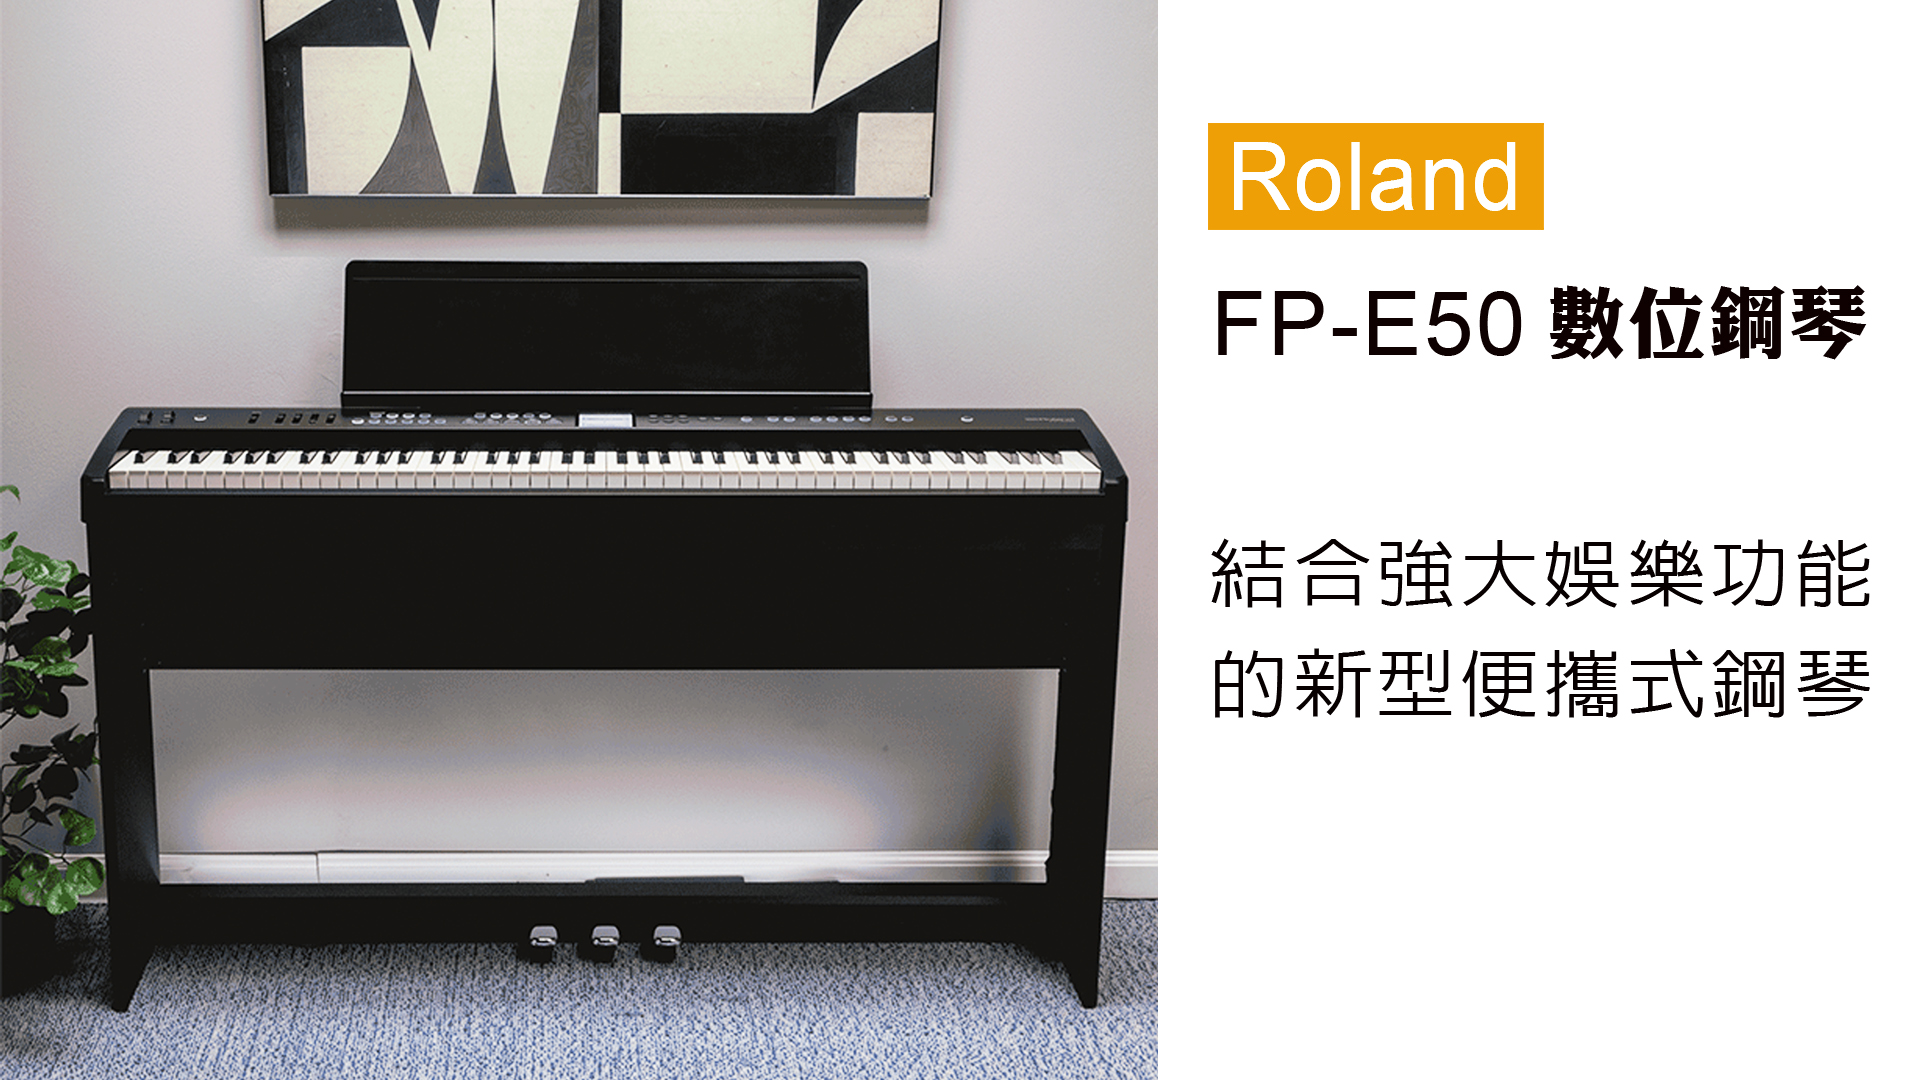 ROLAND FP-E50 電鋼琴新品發表- 音樂城市樂器